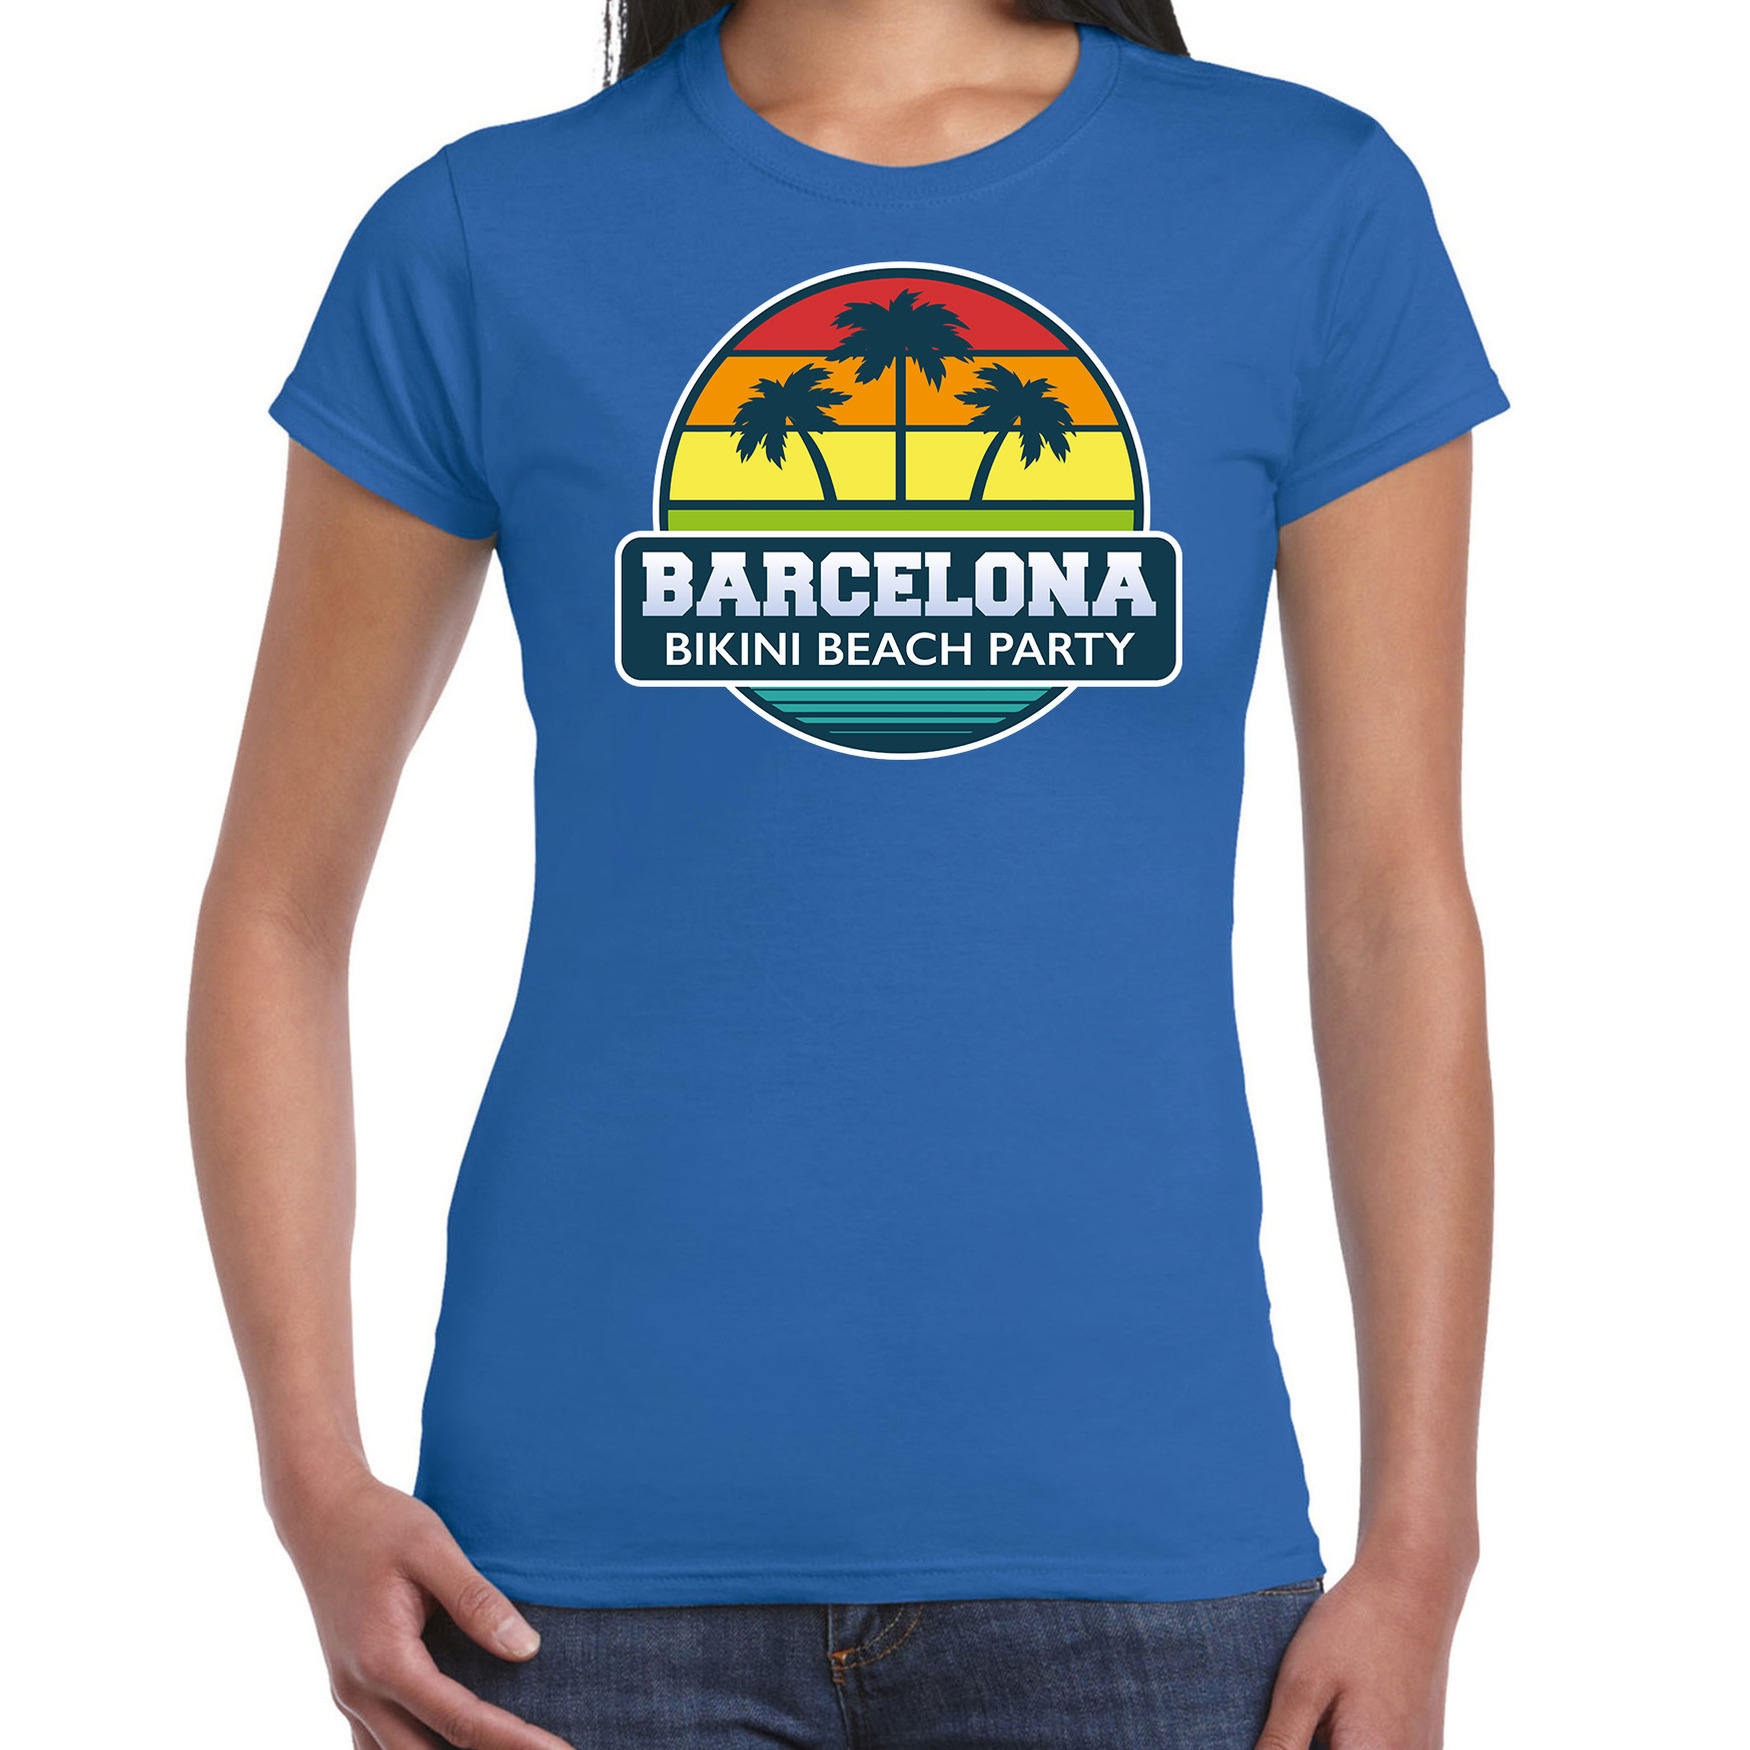 Barcelona zomer t-shirt-shirt Barcelona bikini beach party blauw voor dames